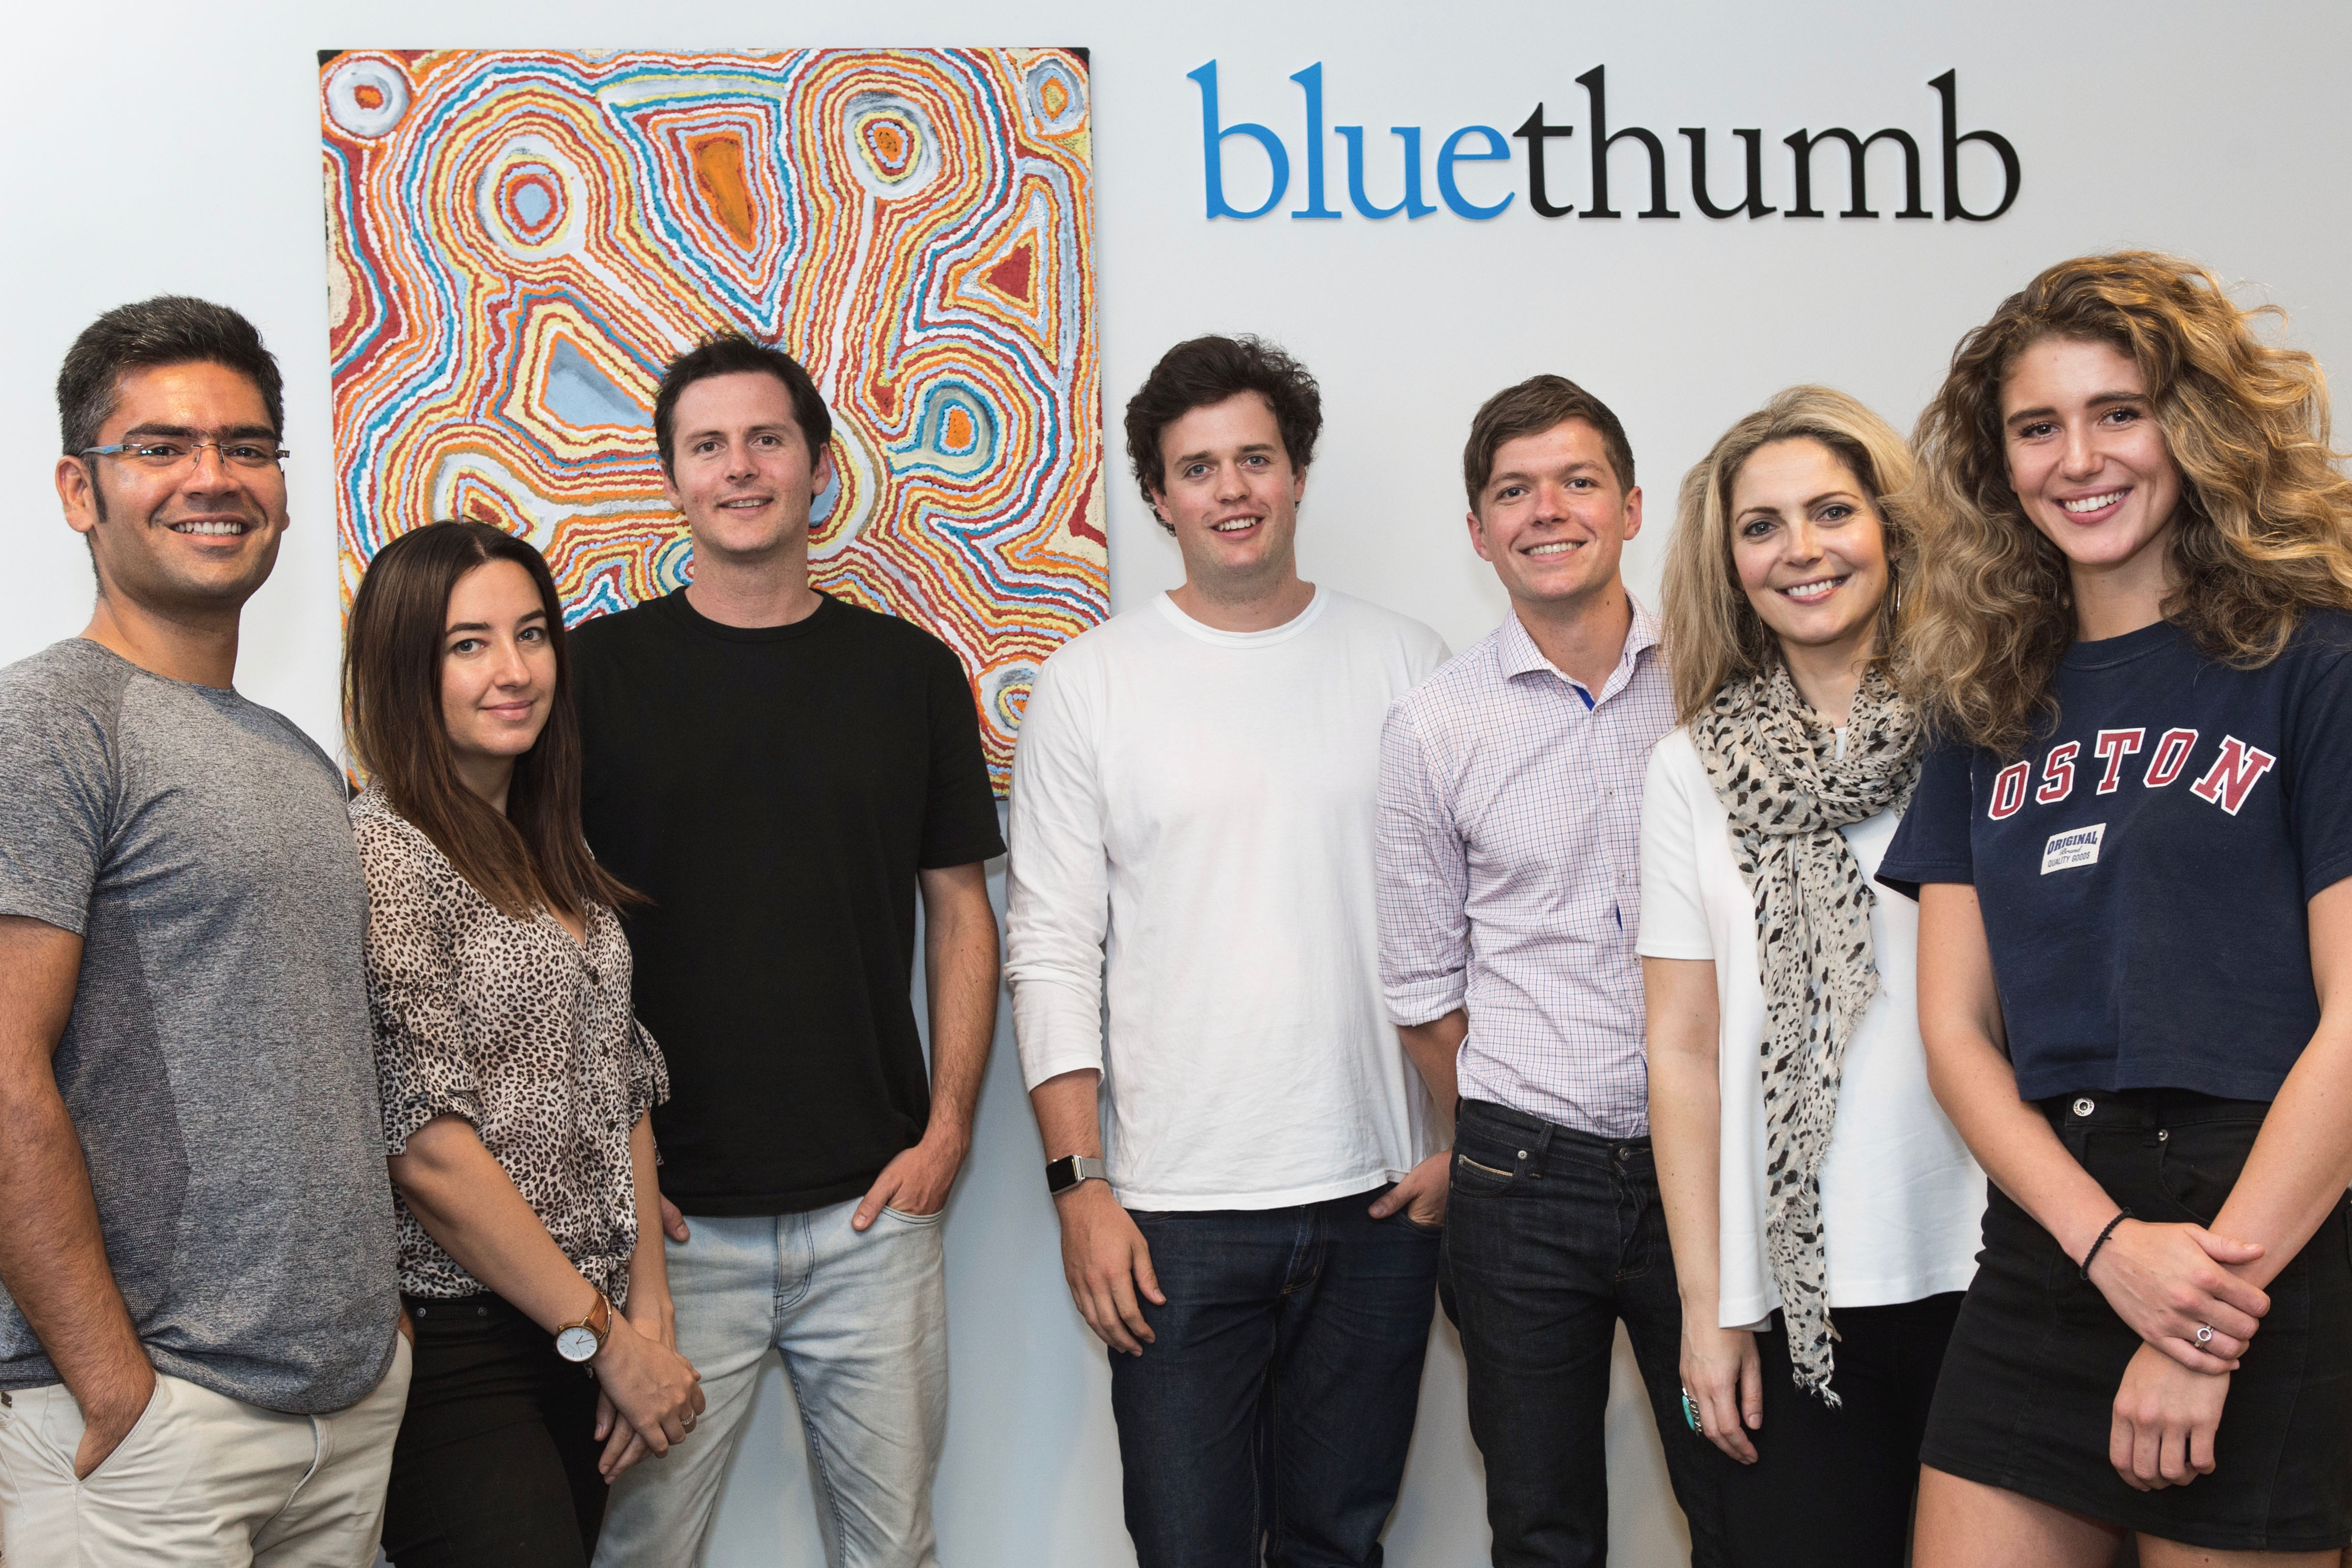 Bluethumb's awesome art fanatics